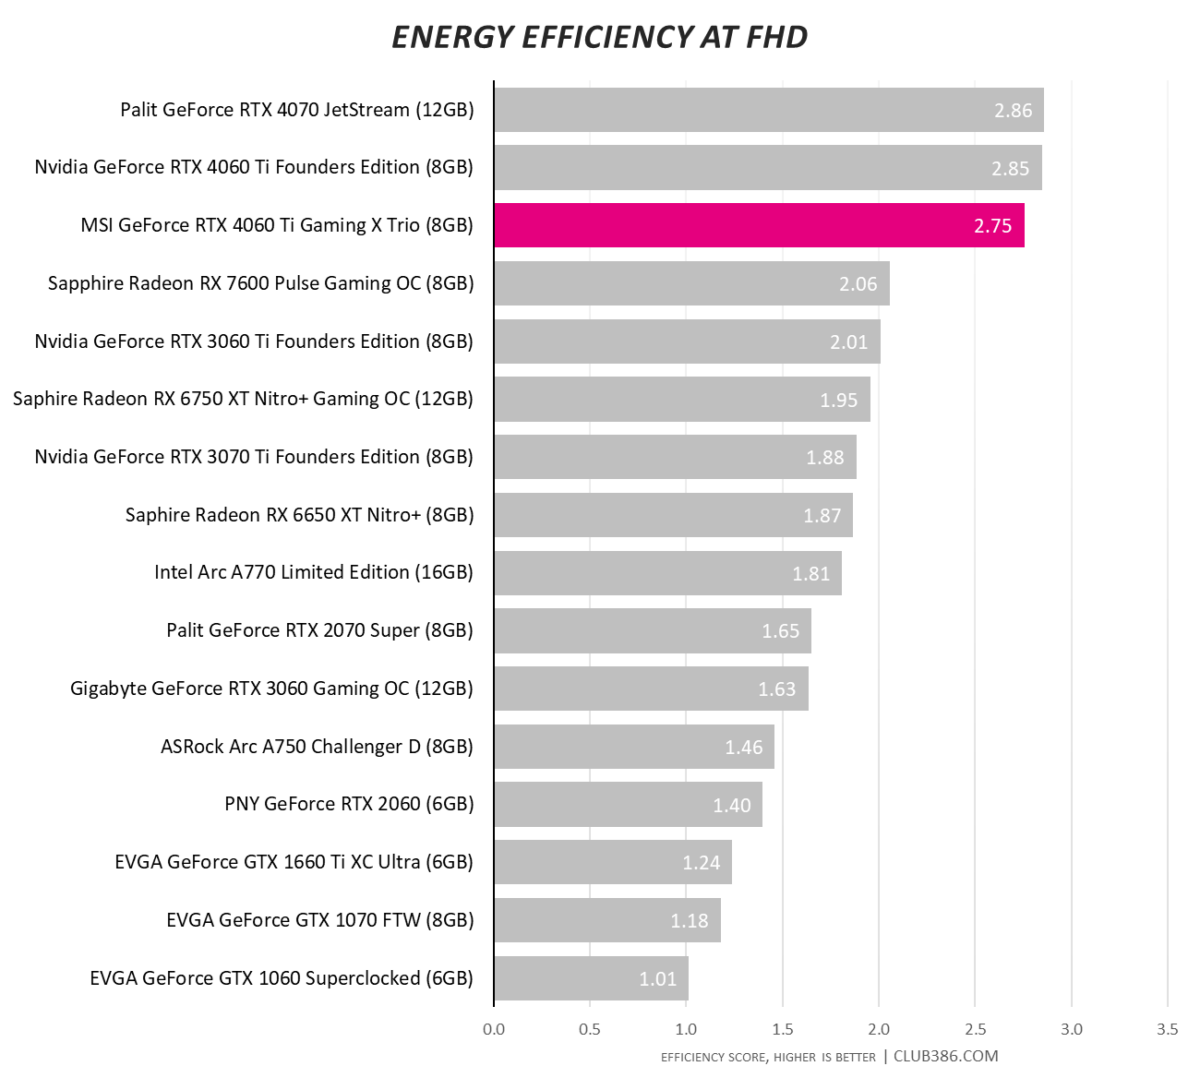 MSI GeForce RTX 4060 Ti Gaming X Trio - Efficiency at FHD